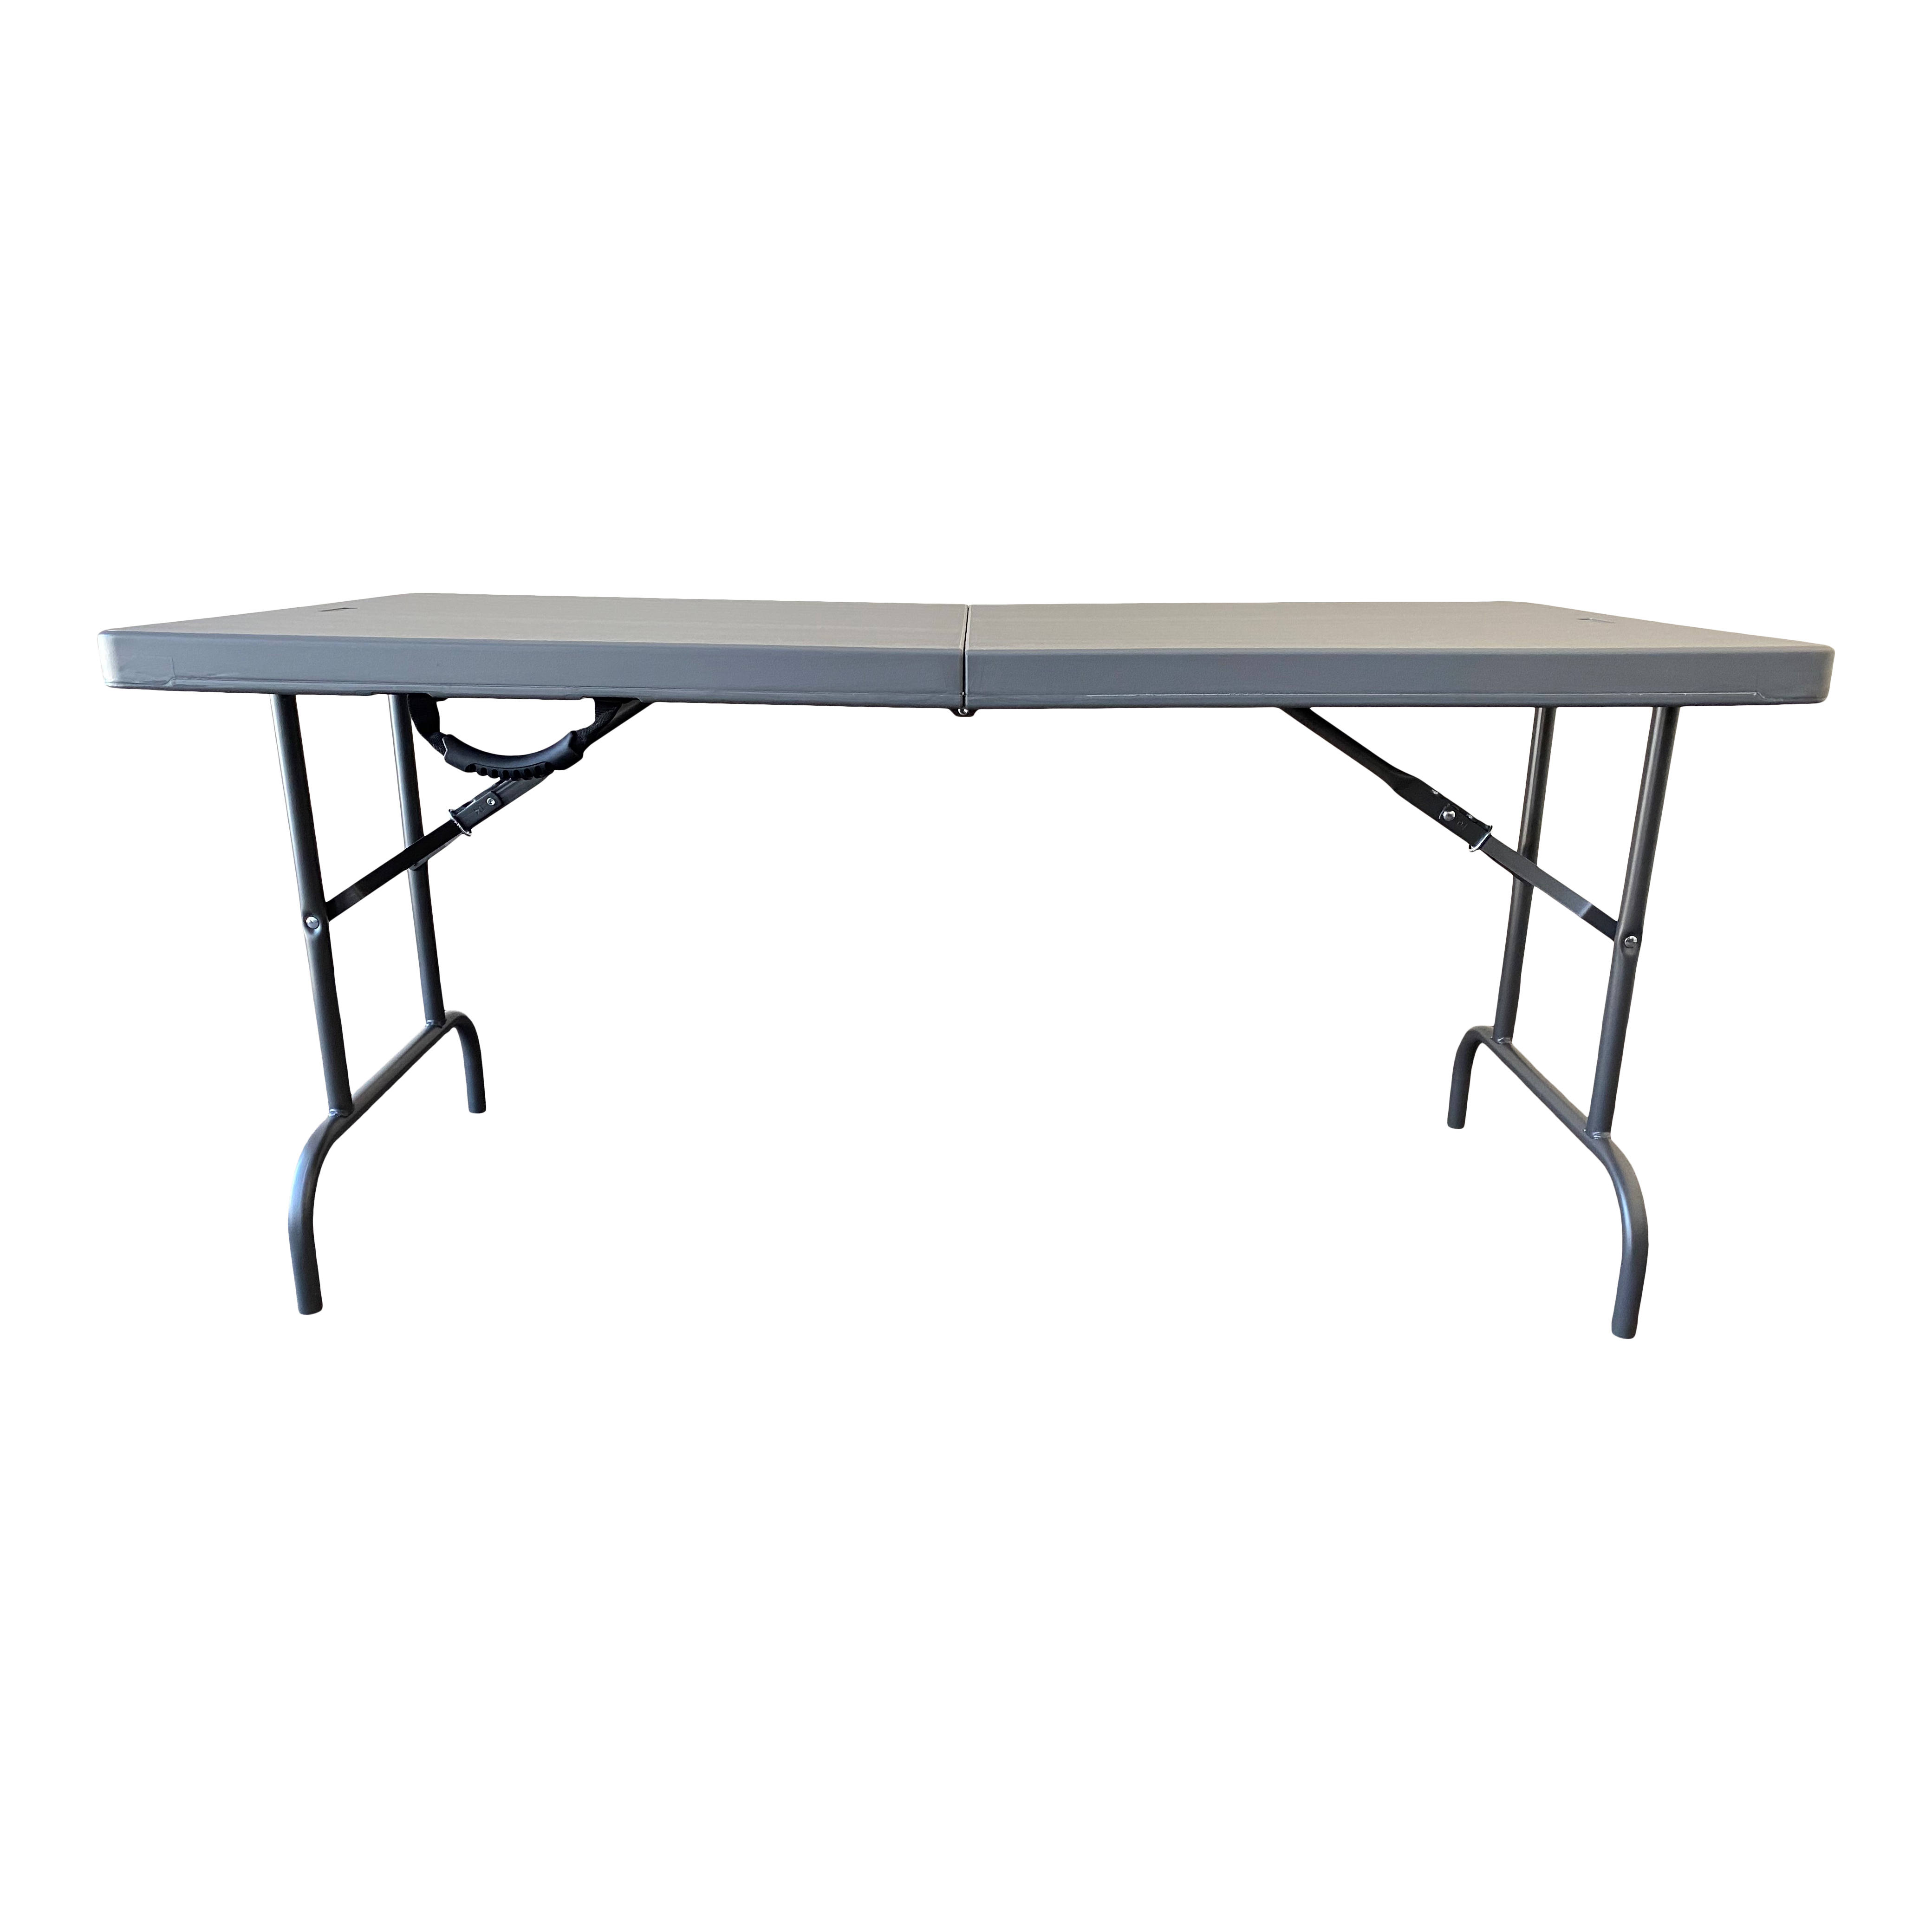 A charcoal five-foot bi-fold folding table.